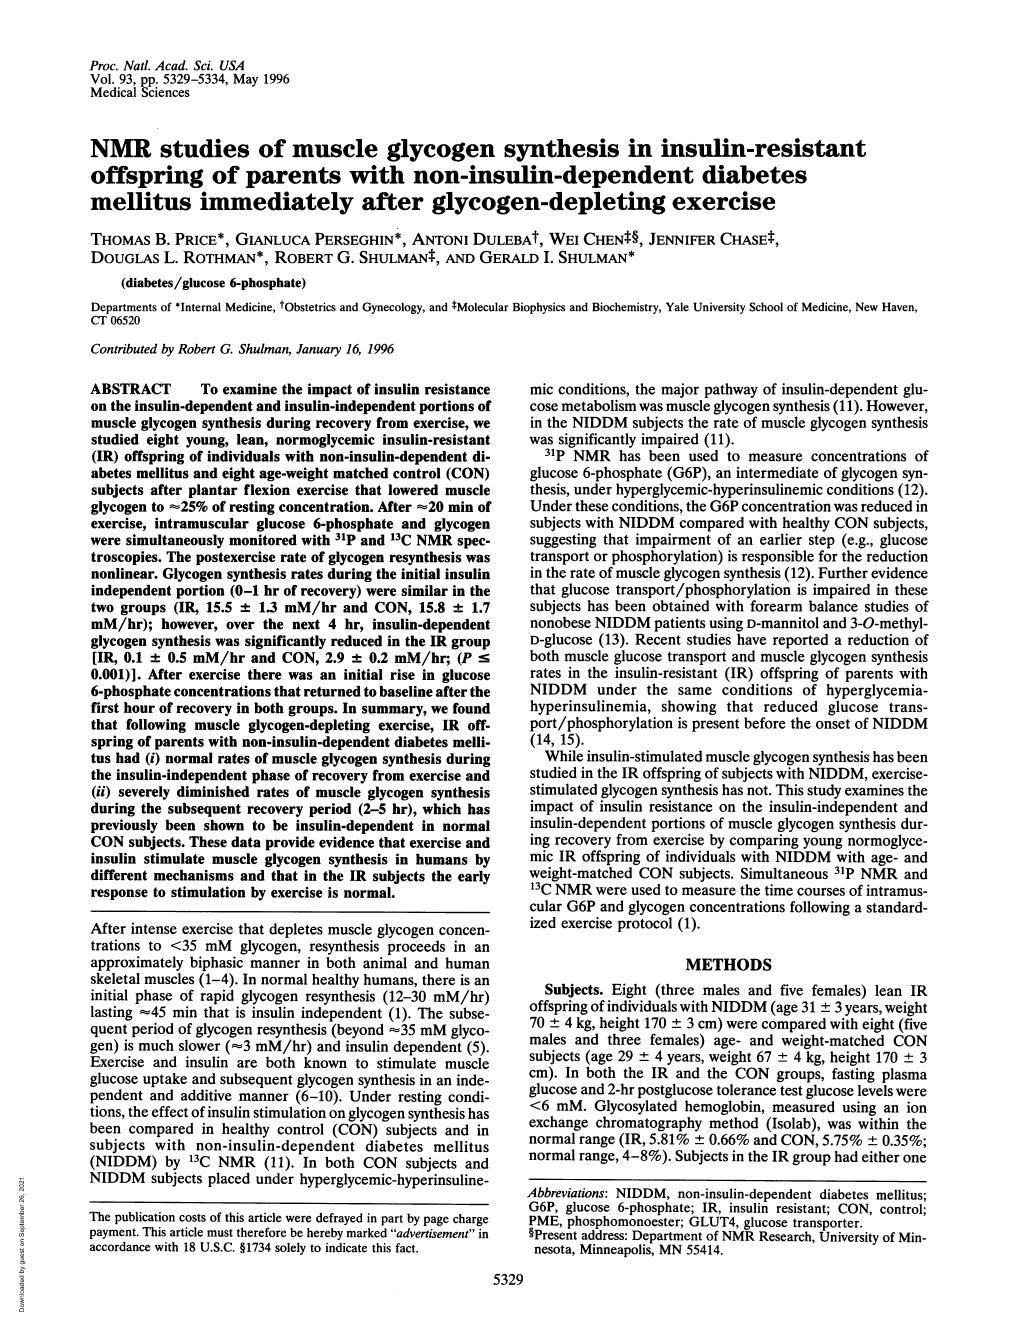 NMR Studies of Muscle Glycogen Synthesis in Insulin-Resistant